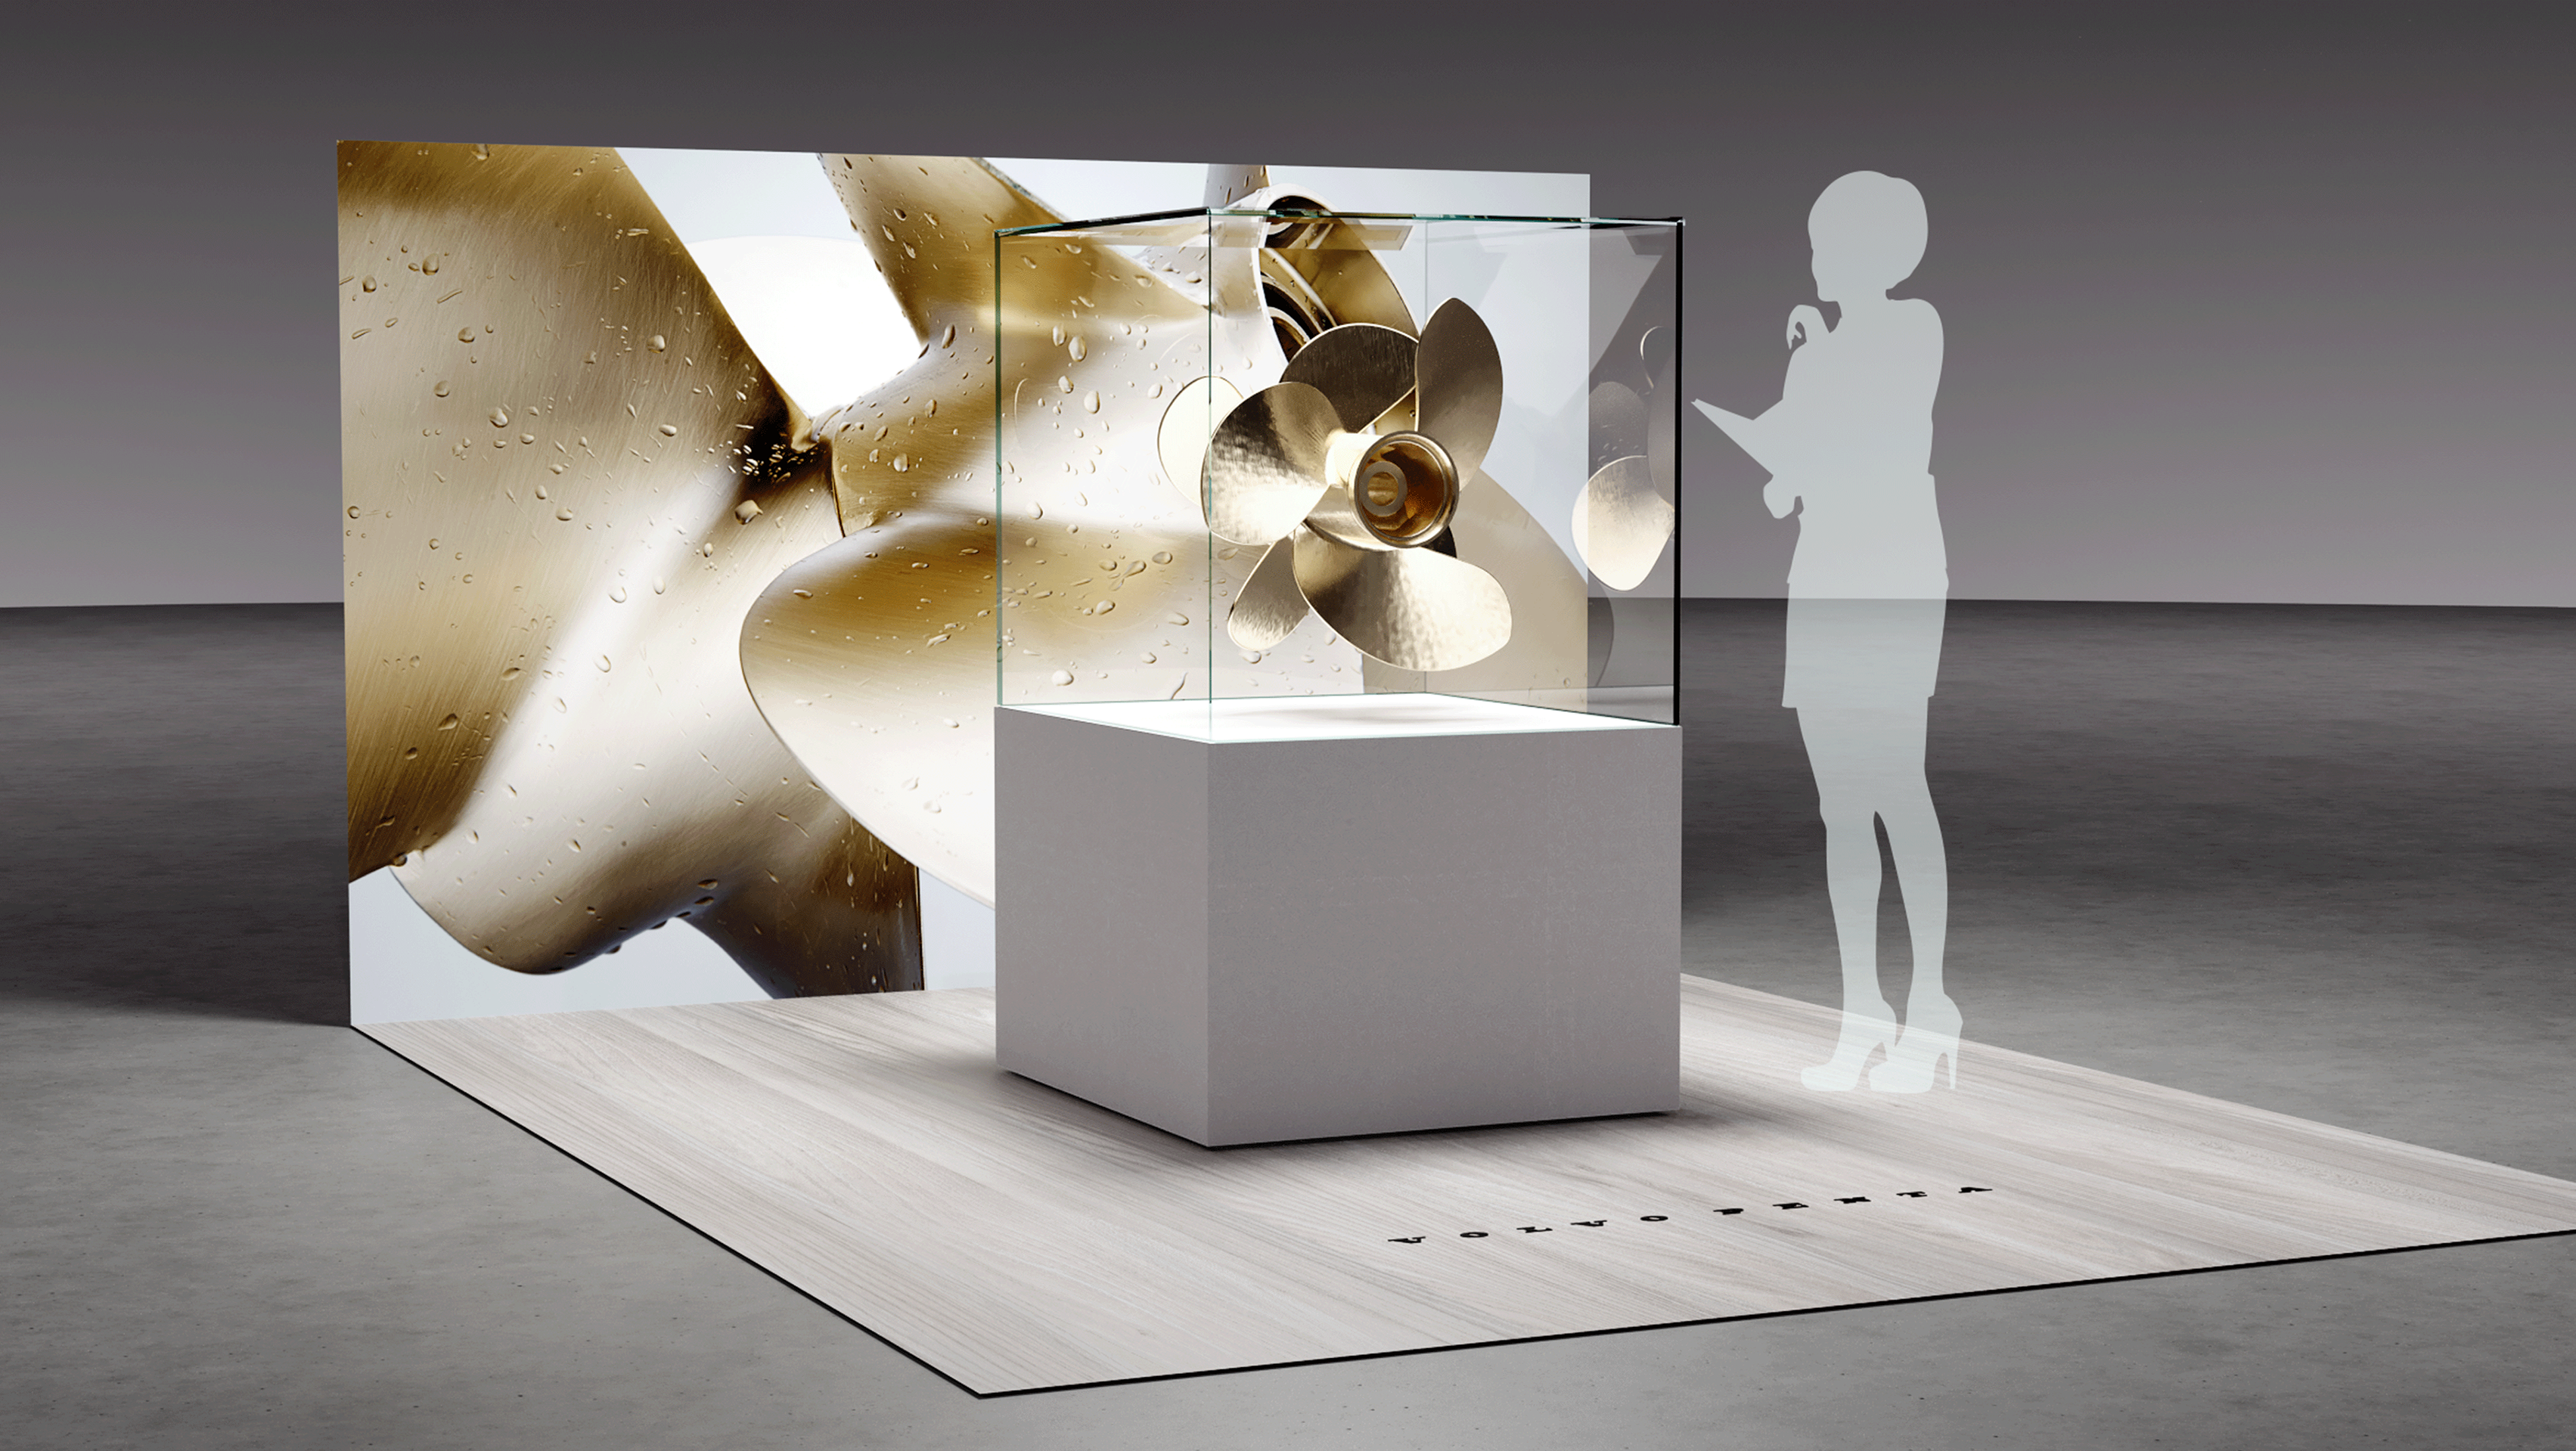 Gustav Hernandez - Louis Vuitton window display